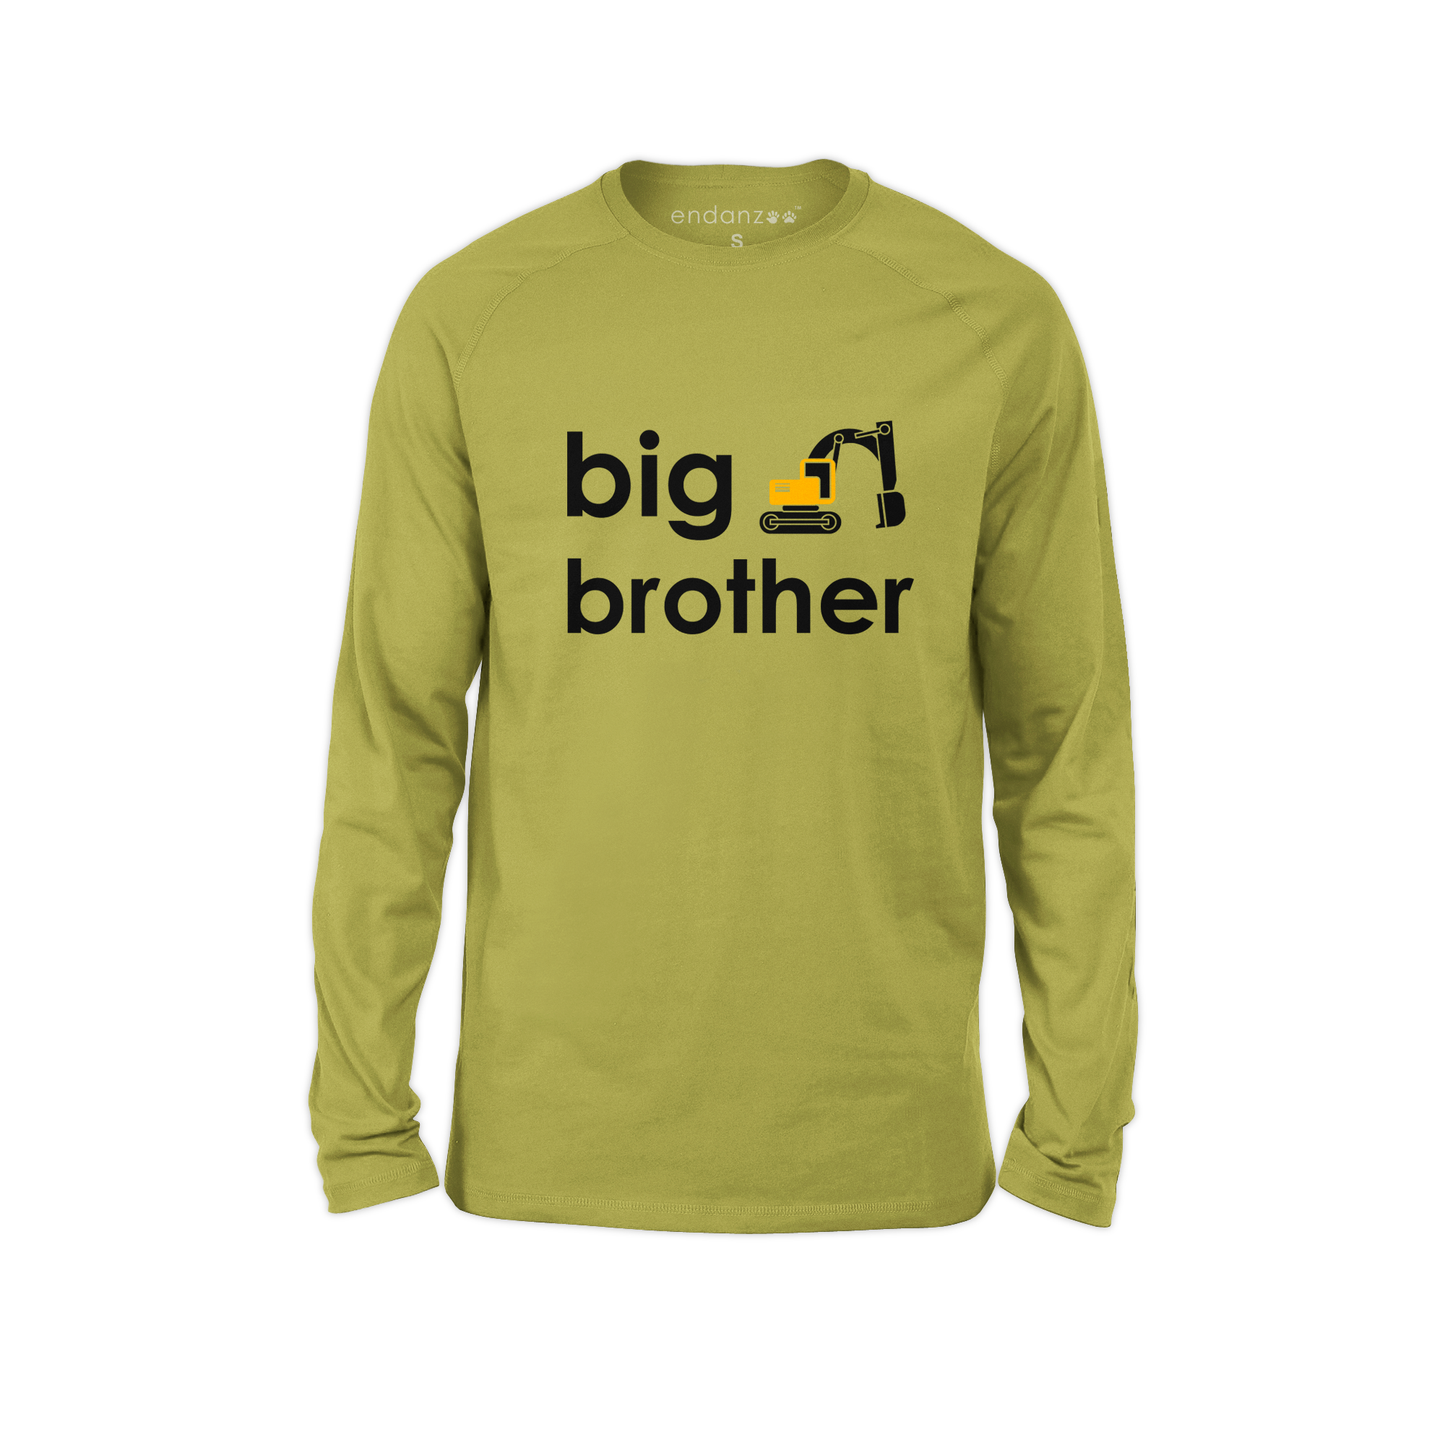 Big Brother Excavator Organic Kids Tee Shirt